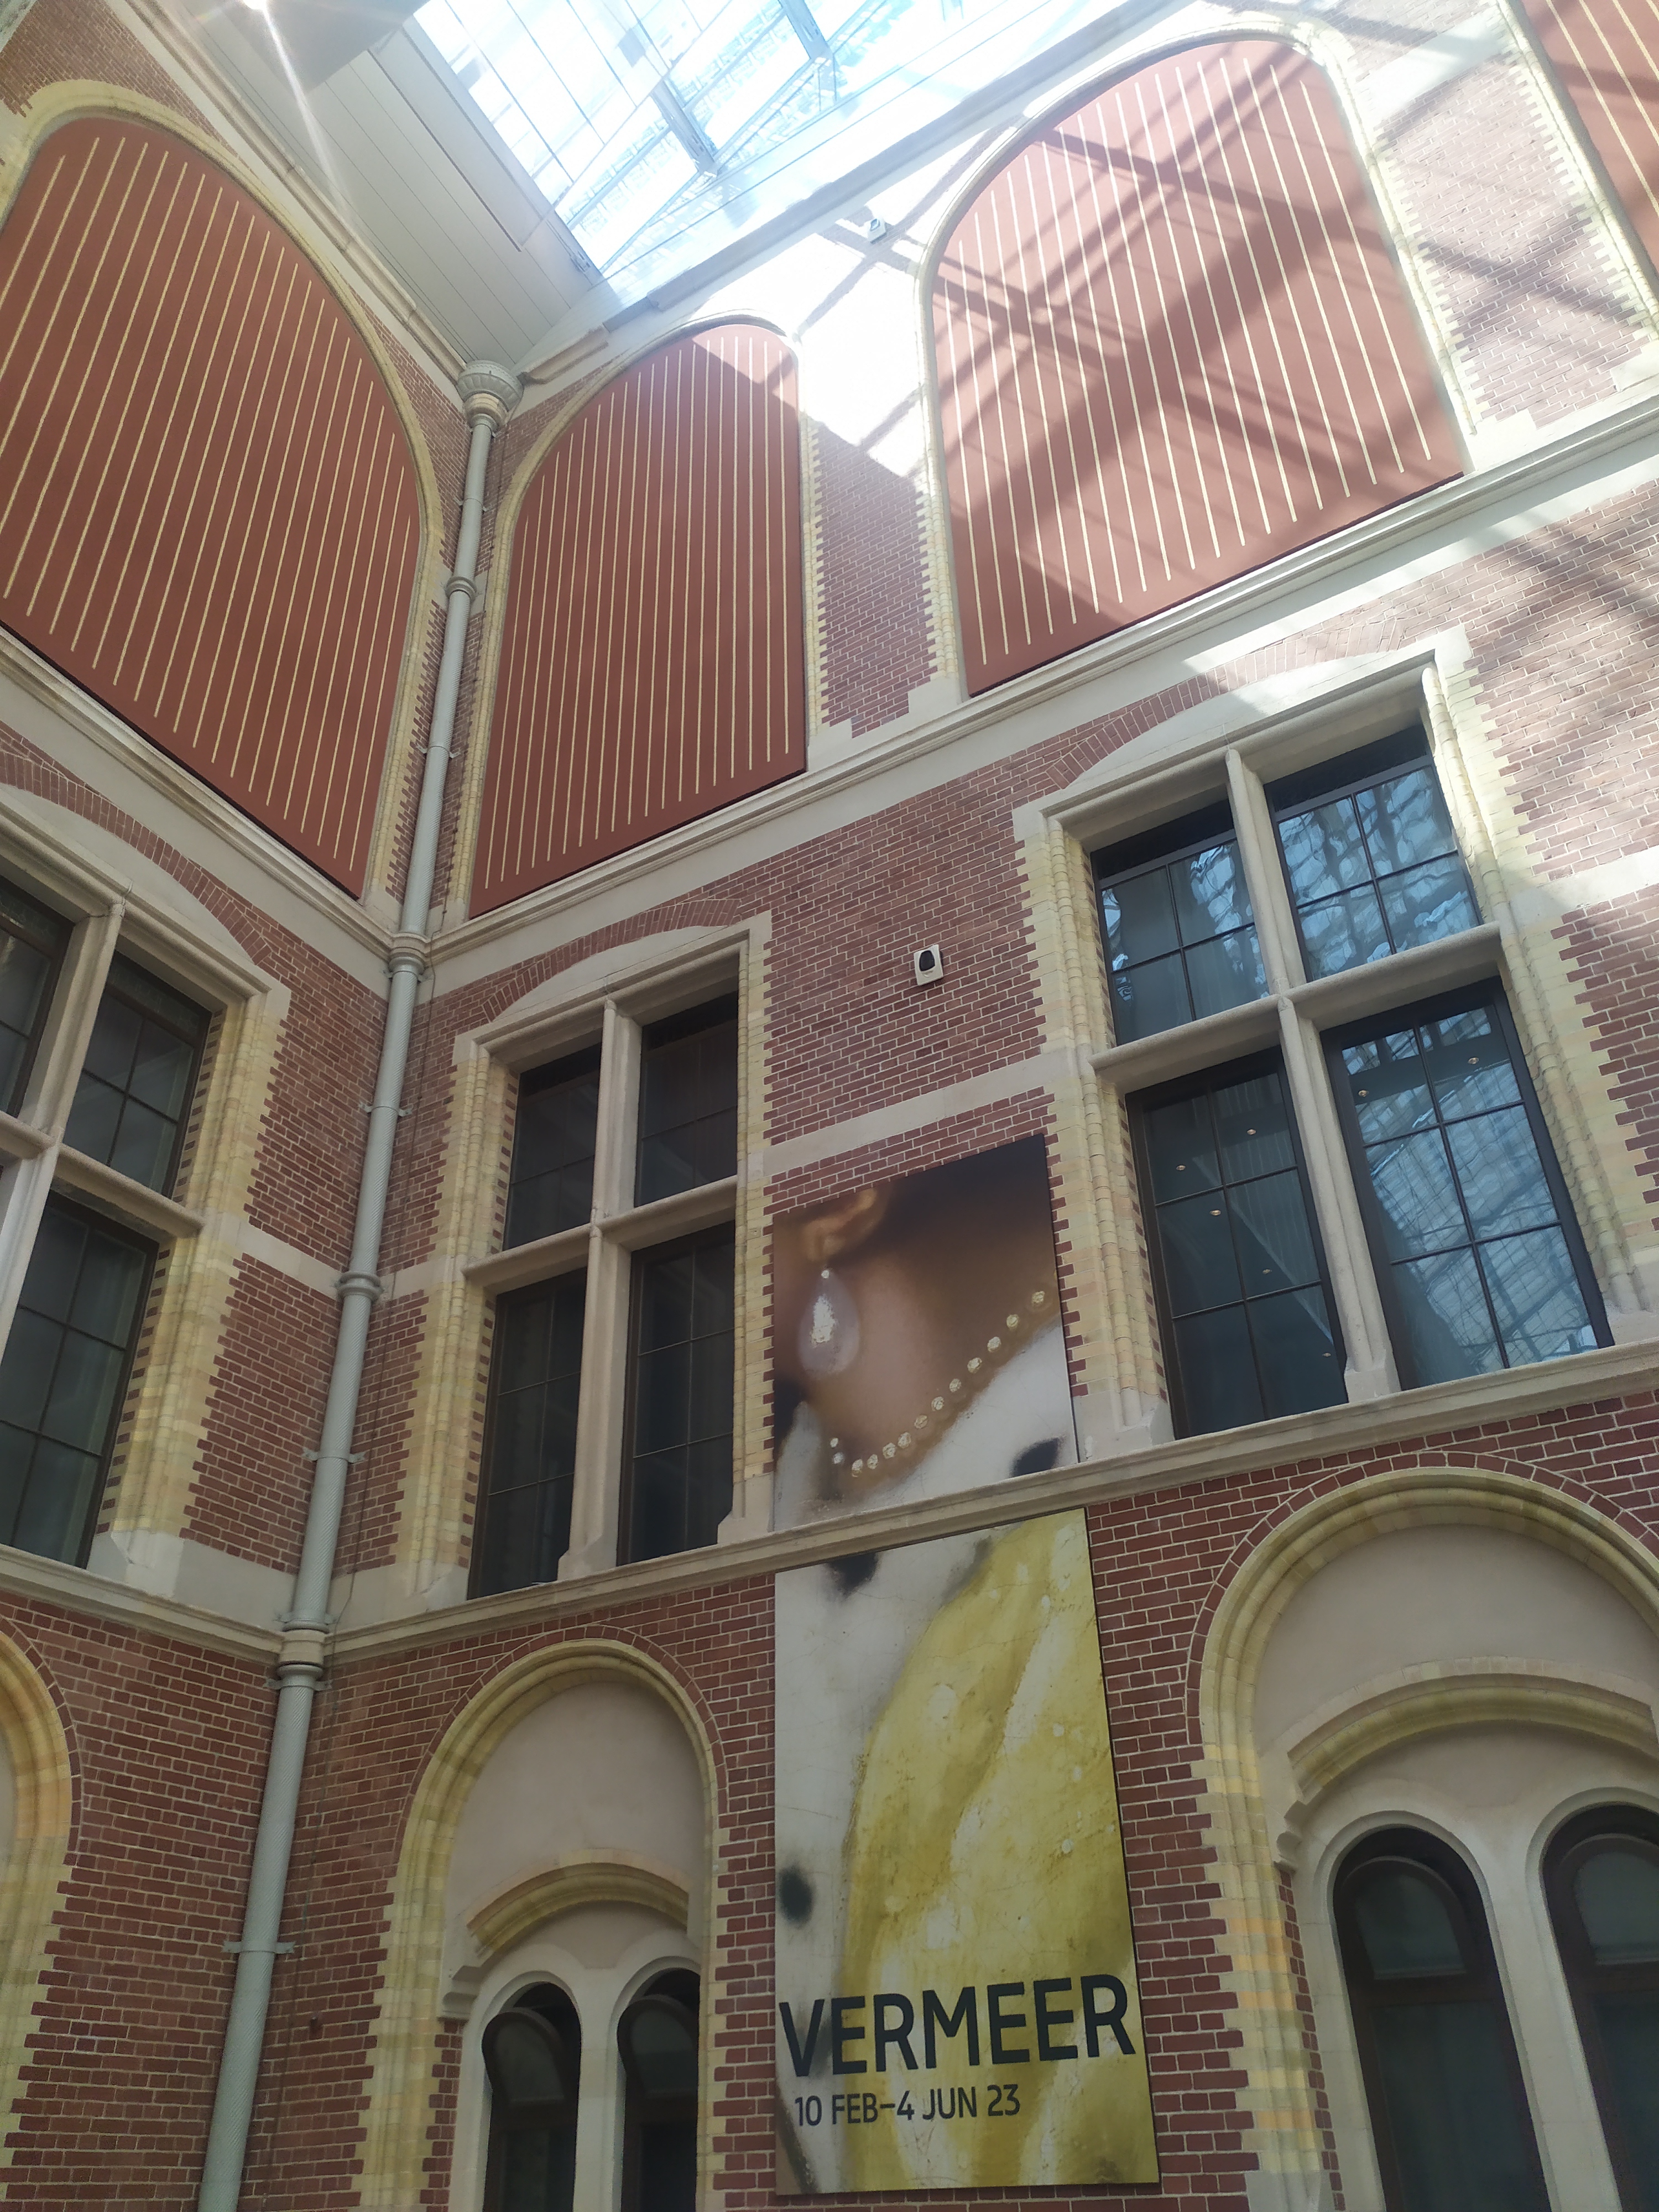 8 Vermeer Ausstellung im Rijksmuseum Amsterdam